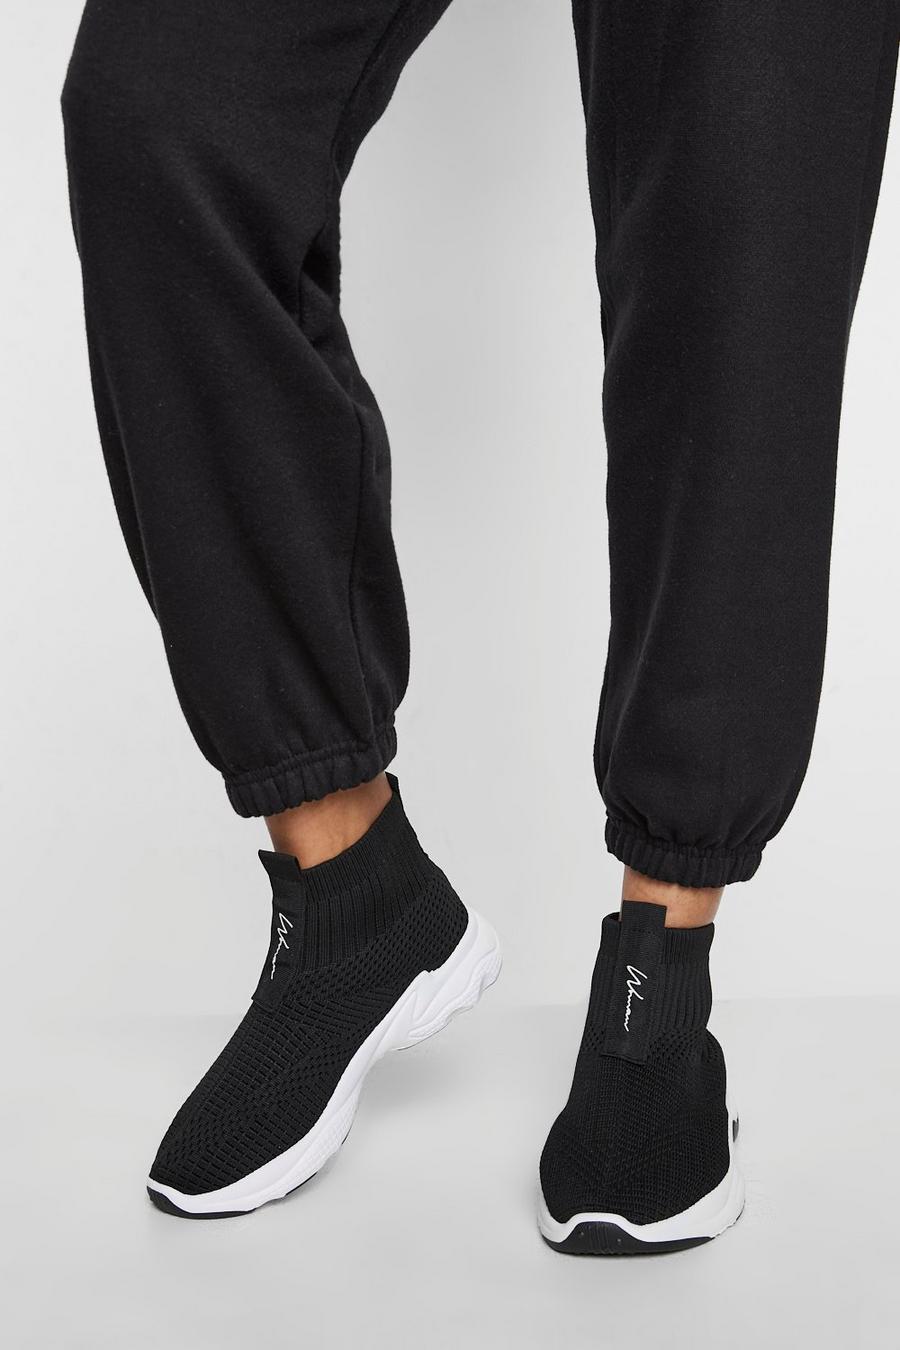 Black Sneakers i sockmodell med chunky sula och bred passform